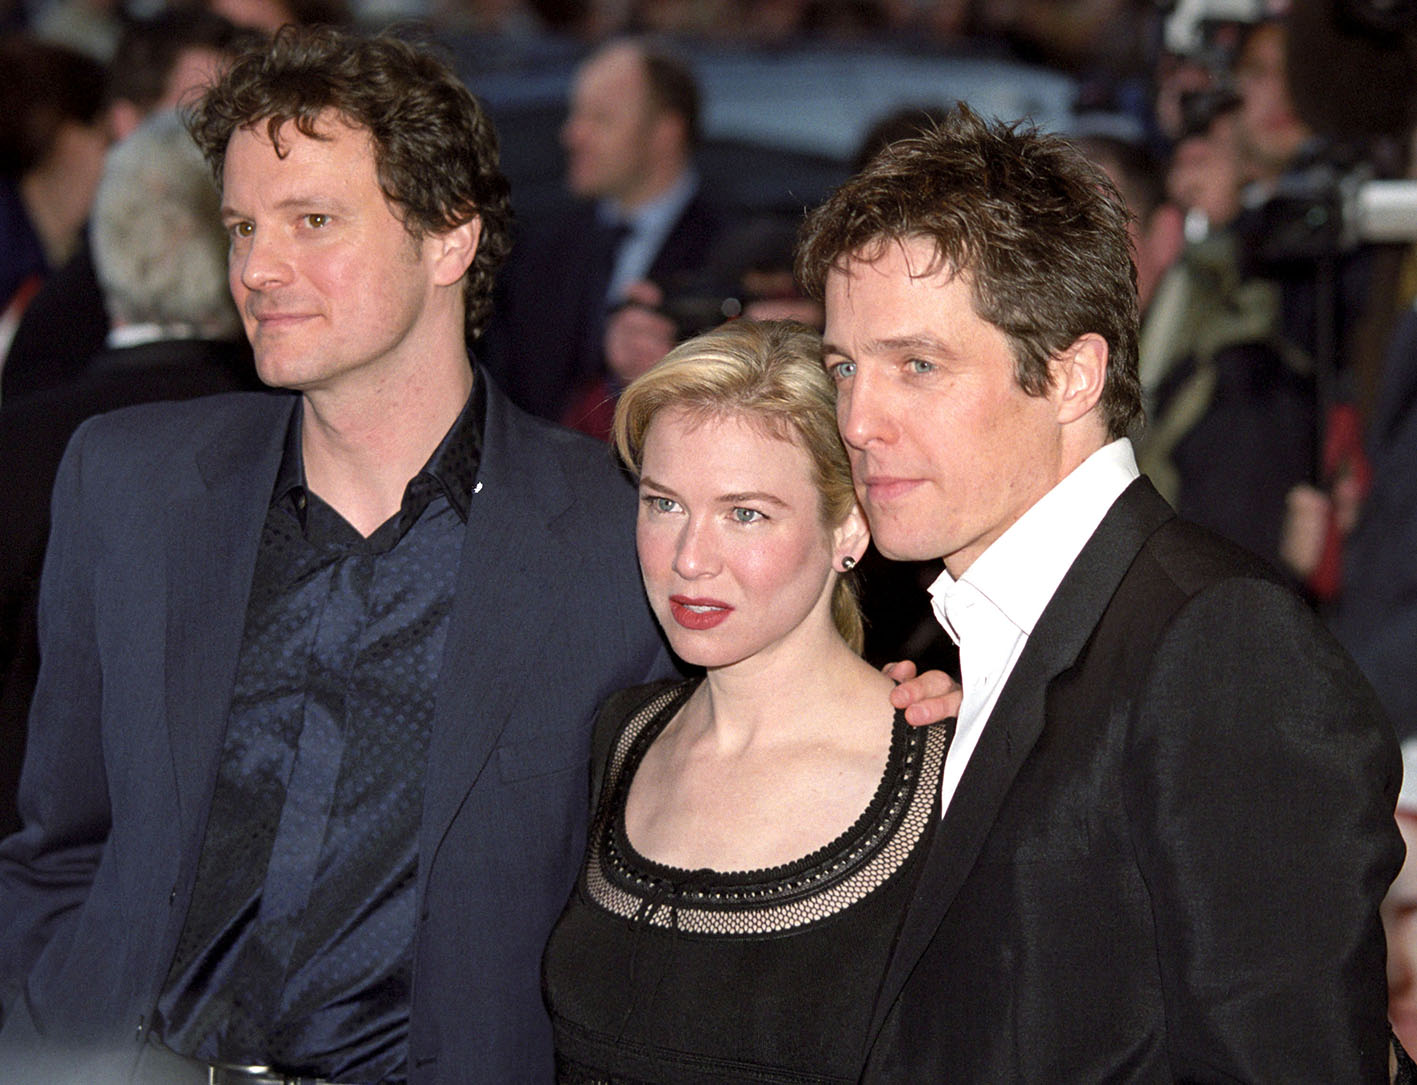 O Colin Firth, η Rene Zellweger και ο Hugh Grant στην πρεμιέρα της ταινίας "Bridget Jones's Diary" στο Λονδίνο.